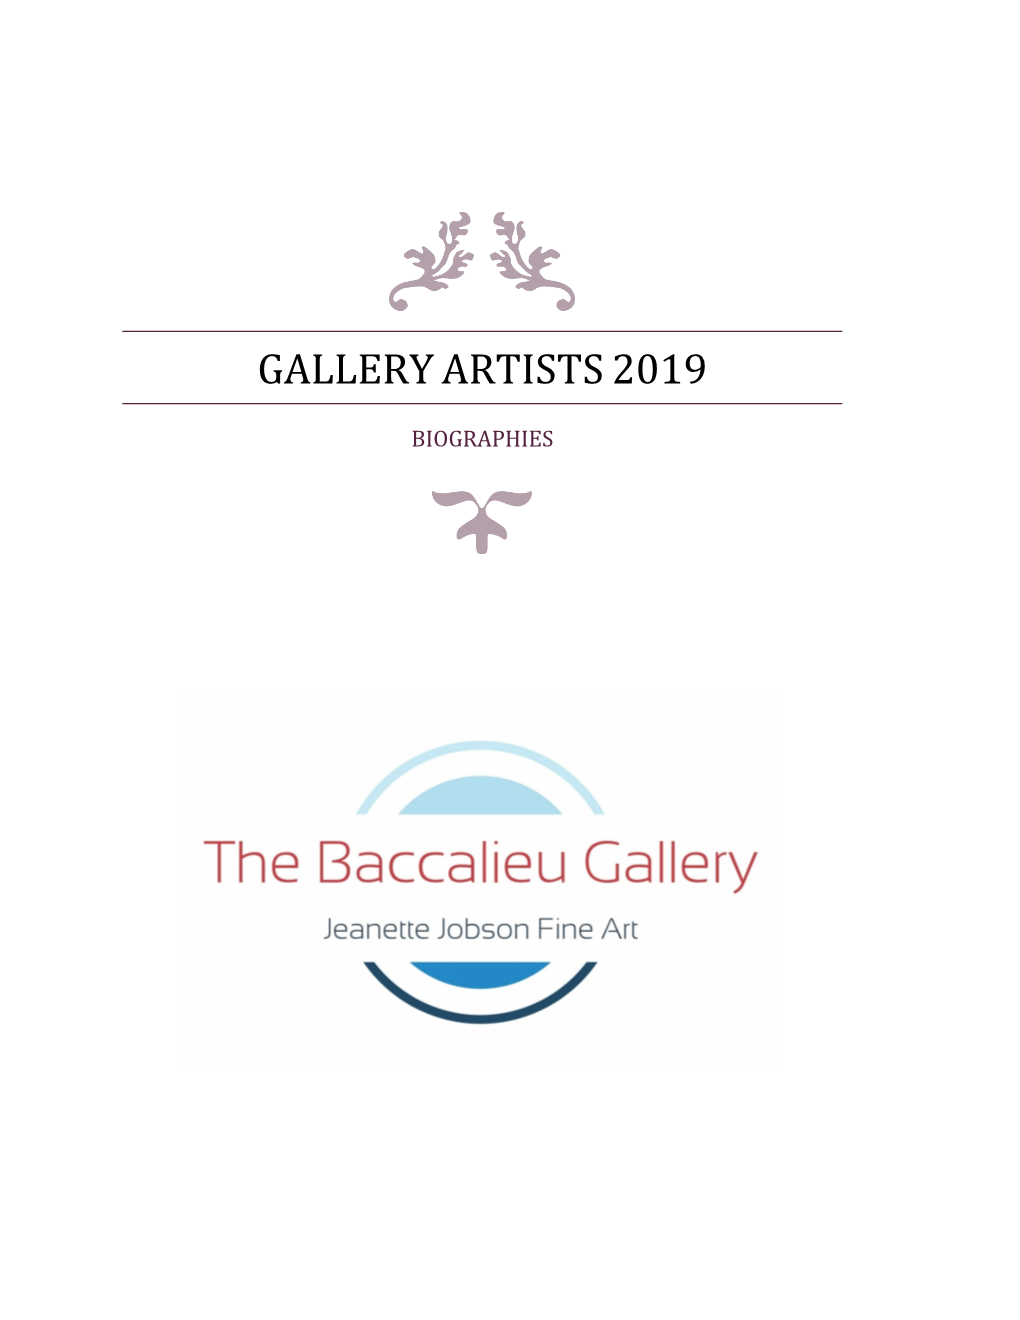 Gallery Artists 2019 Bios